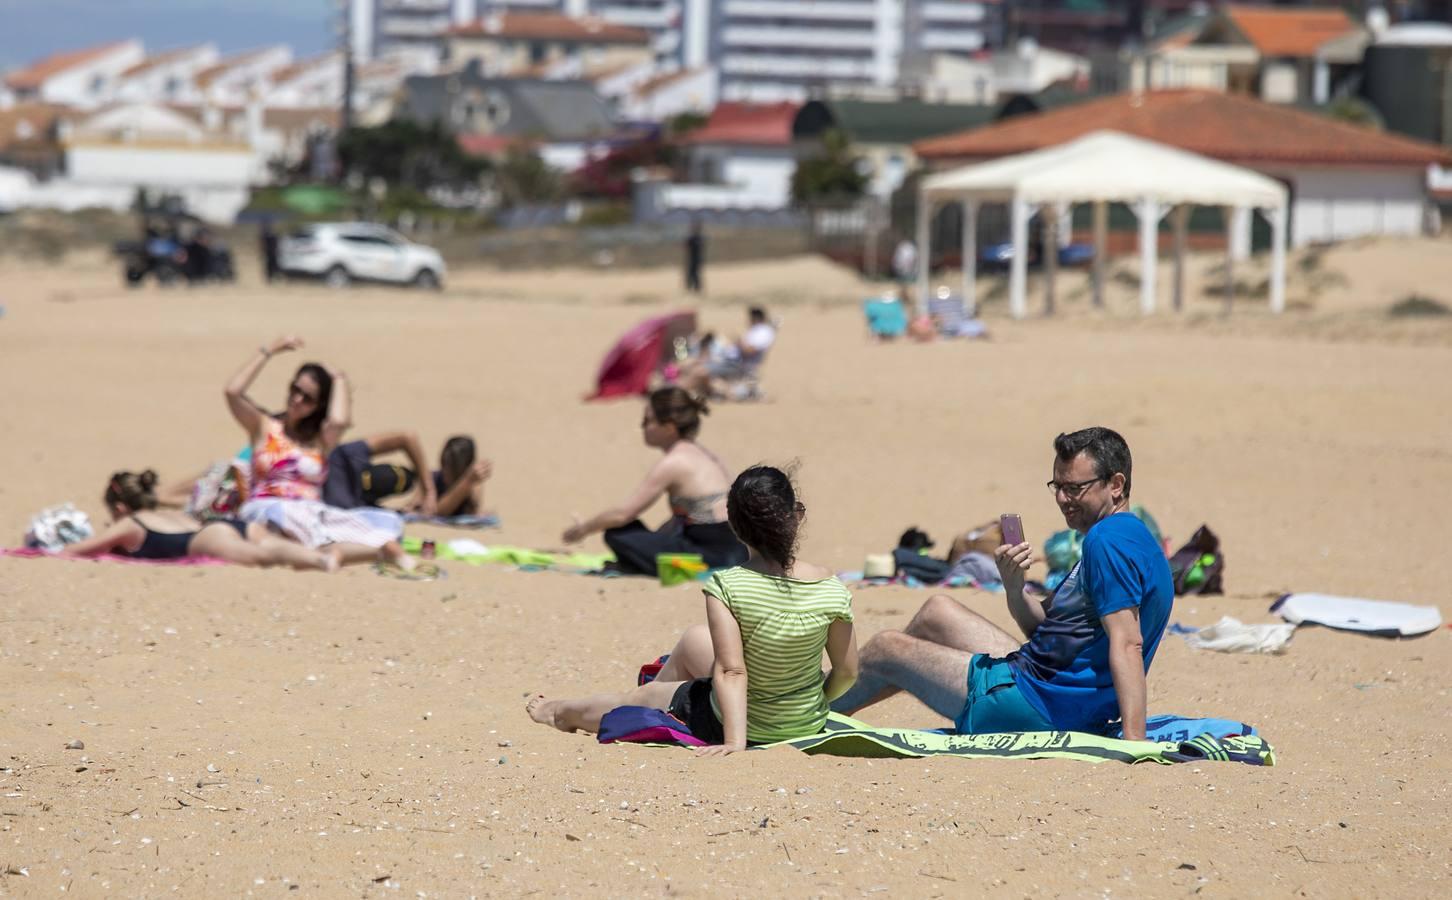 Muchas ganas de playa en Huelva